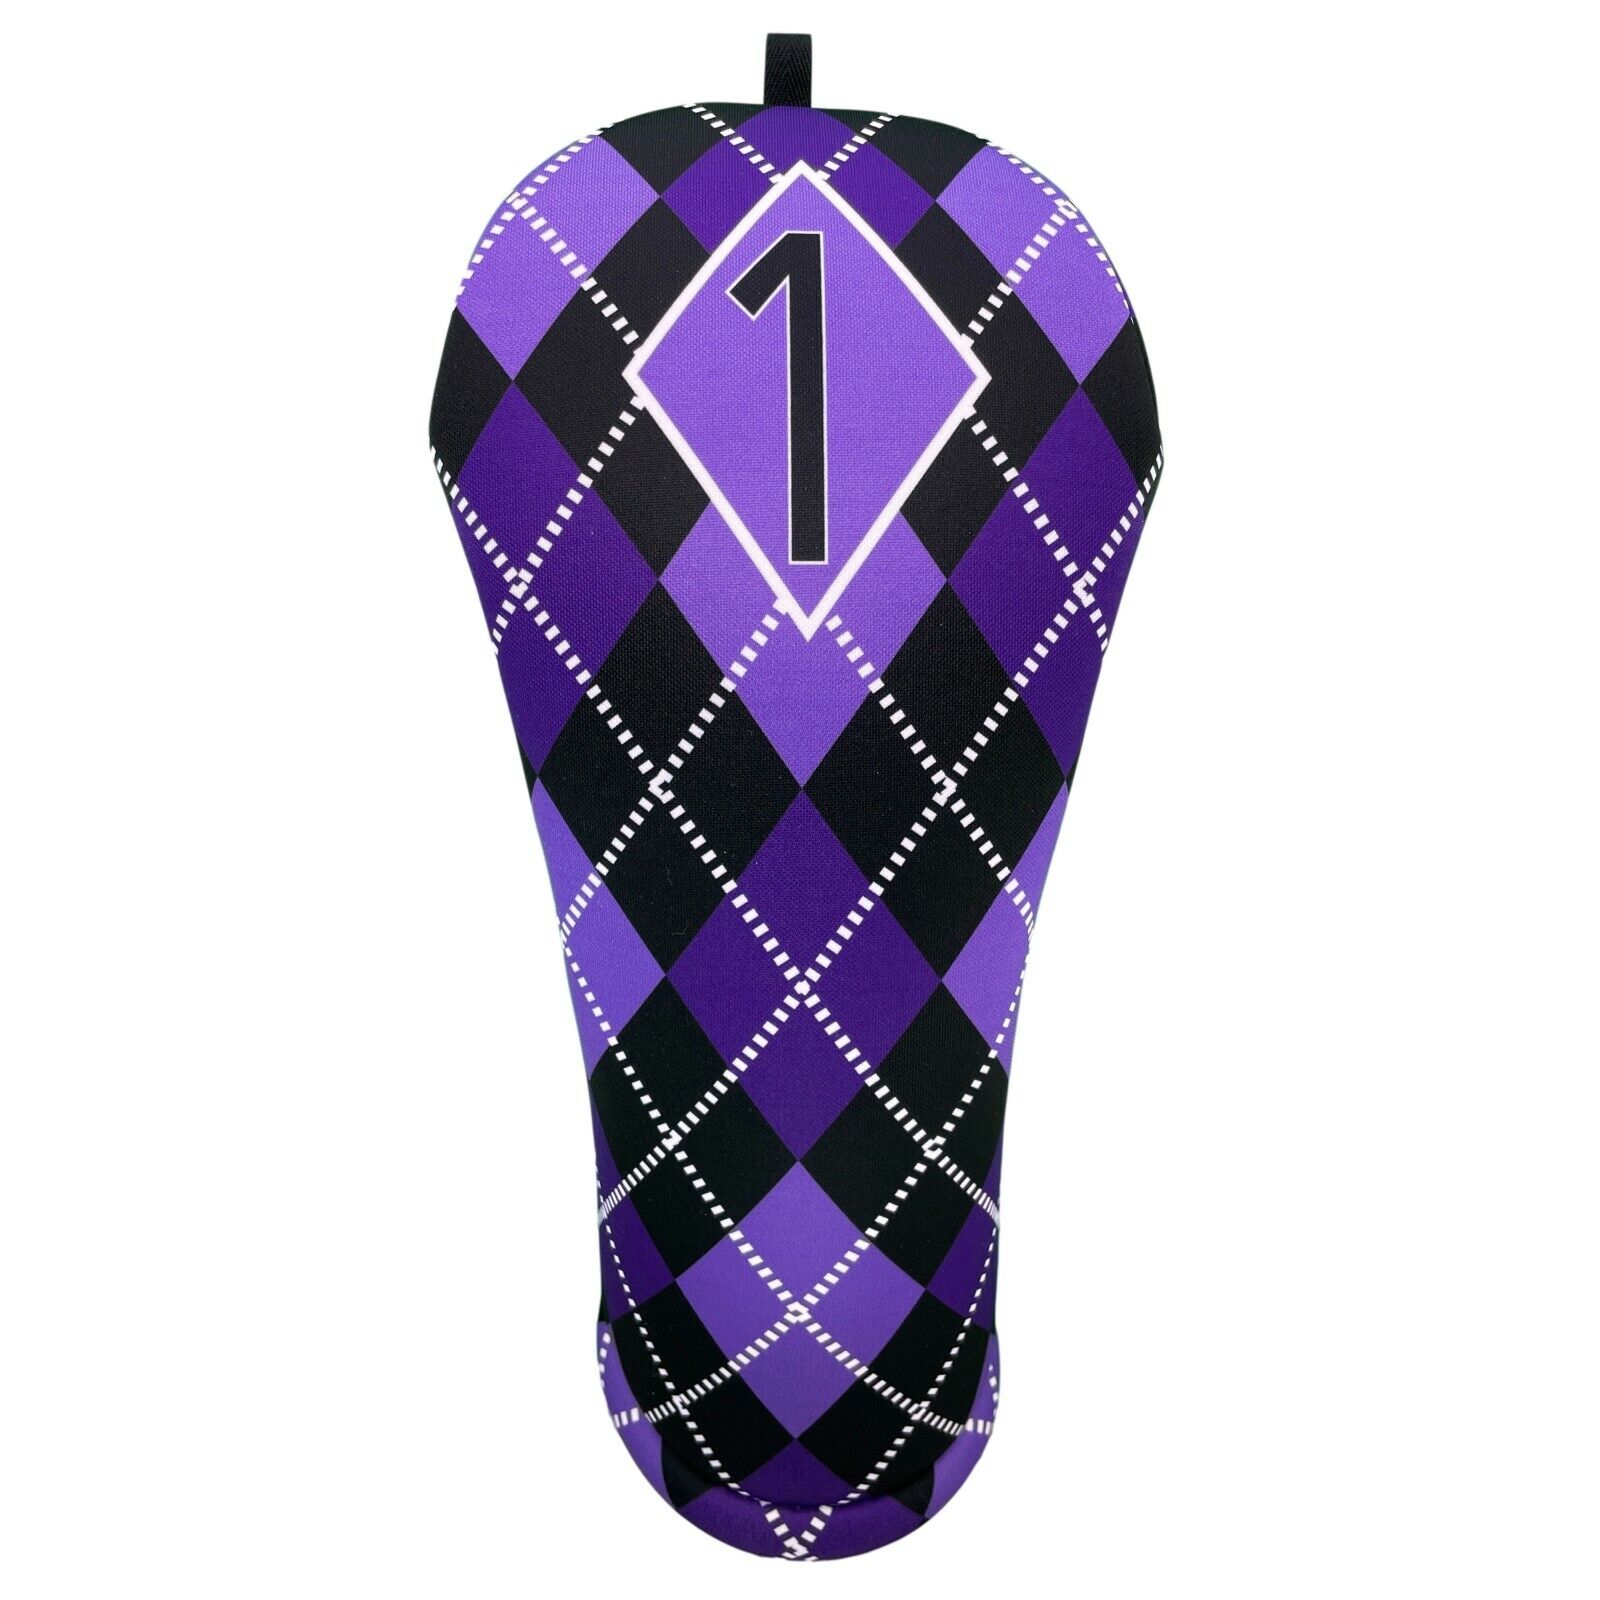 BeeJos Purple and Black Argyle Golf Club Head Covers